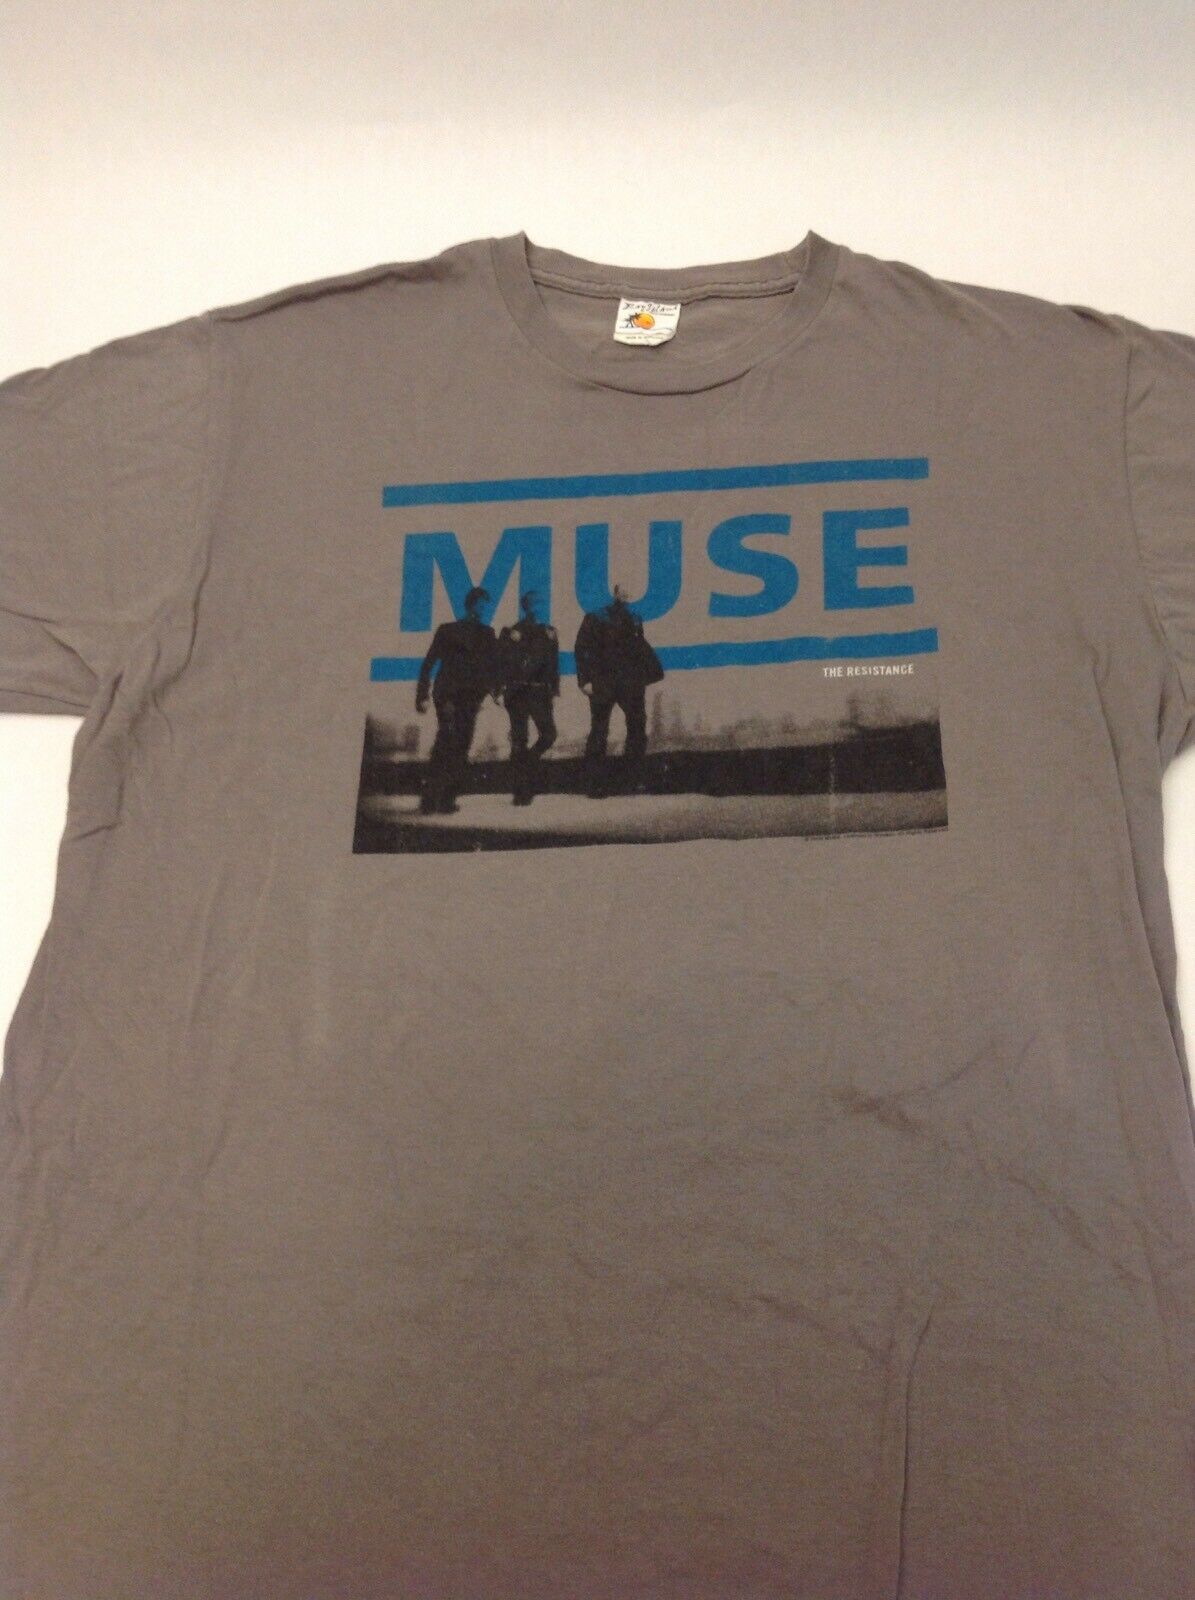 Muse The Resistance 2009 Bravado Gray XL Shirt